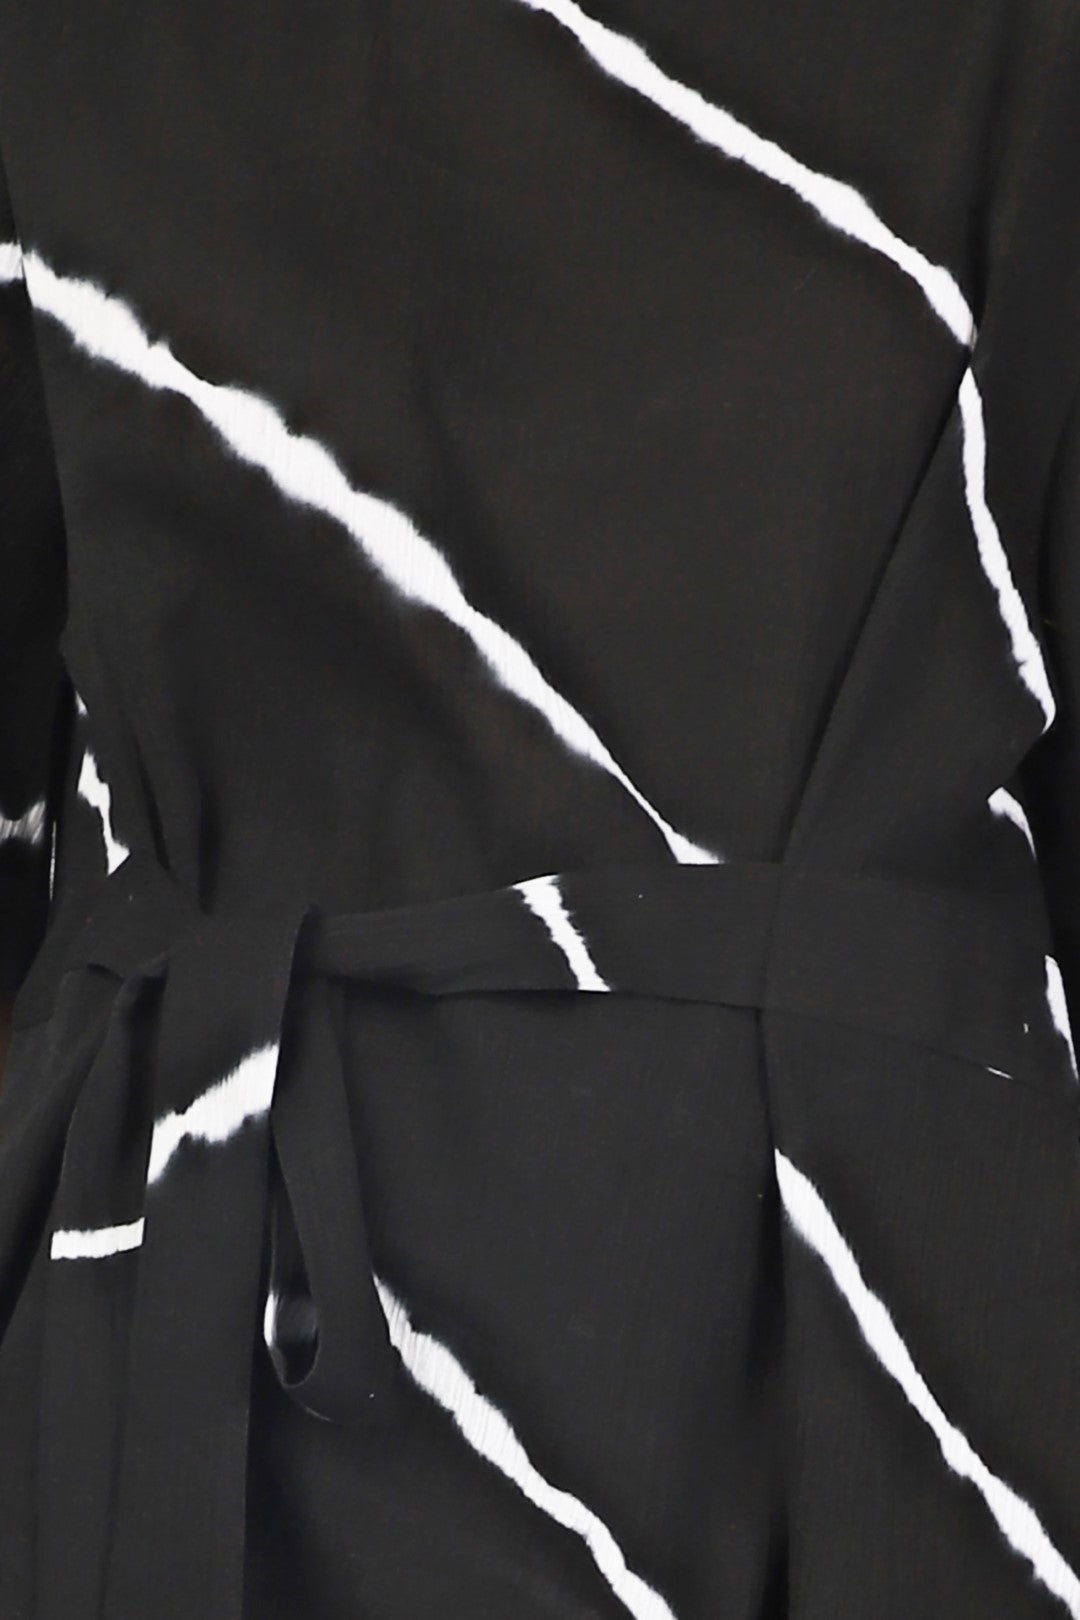 Black Shibori Stripes Co-Ord